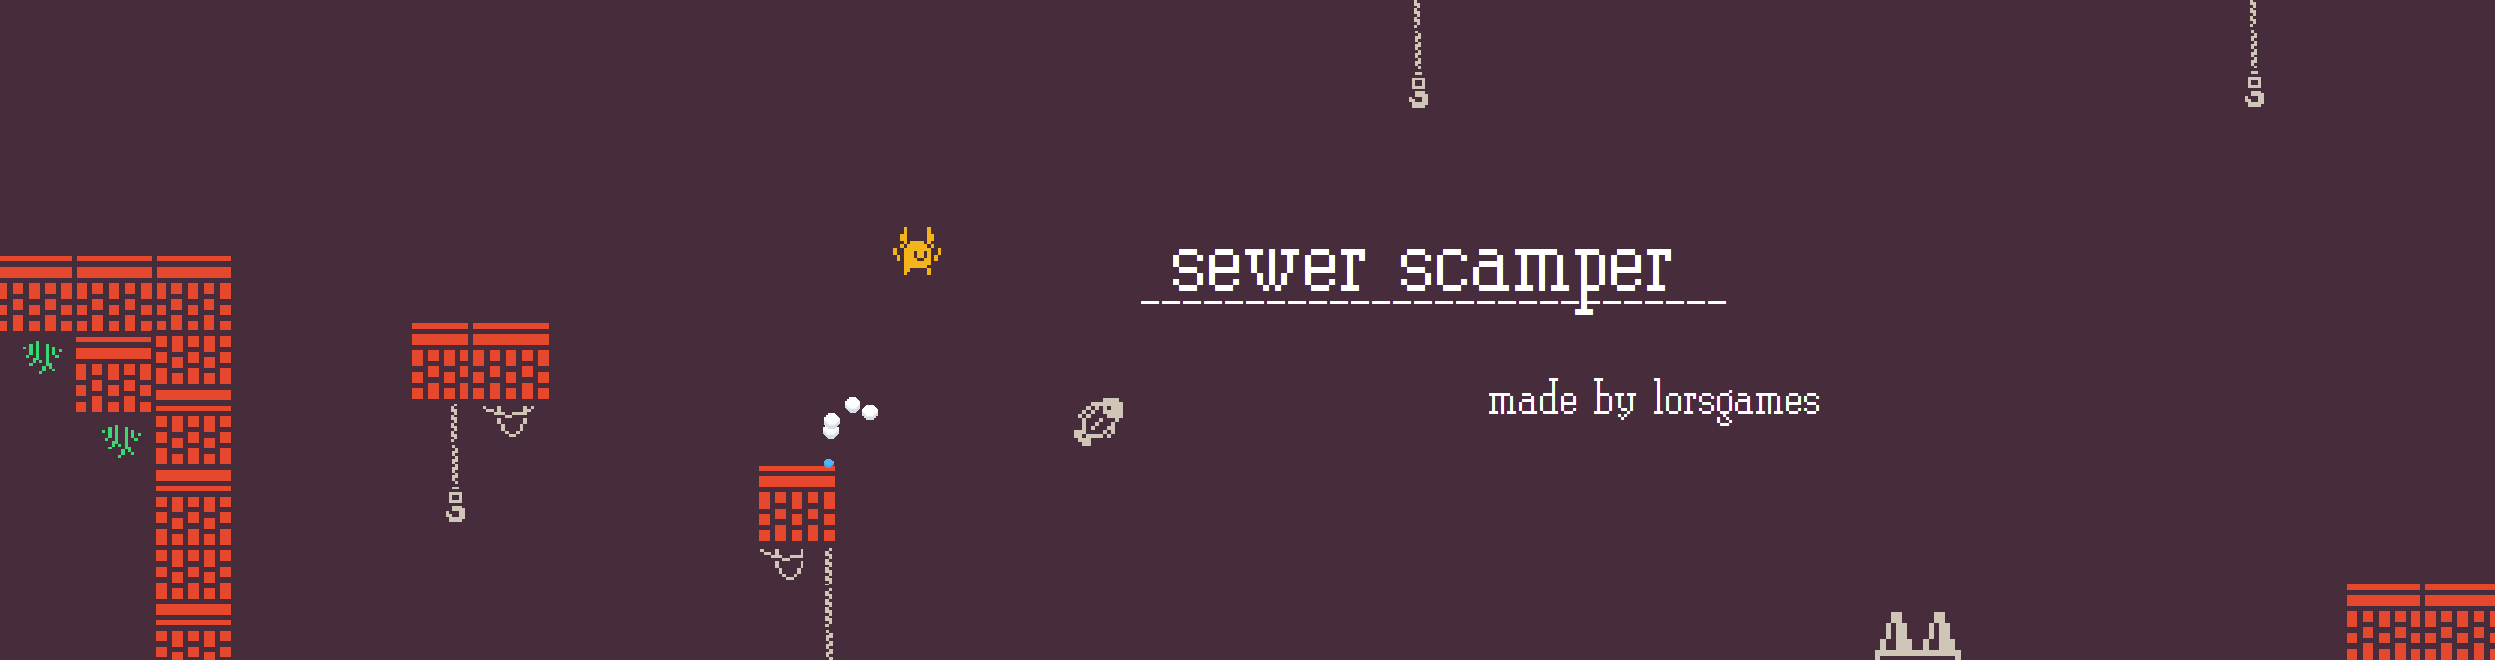 sewer scamper